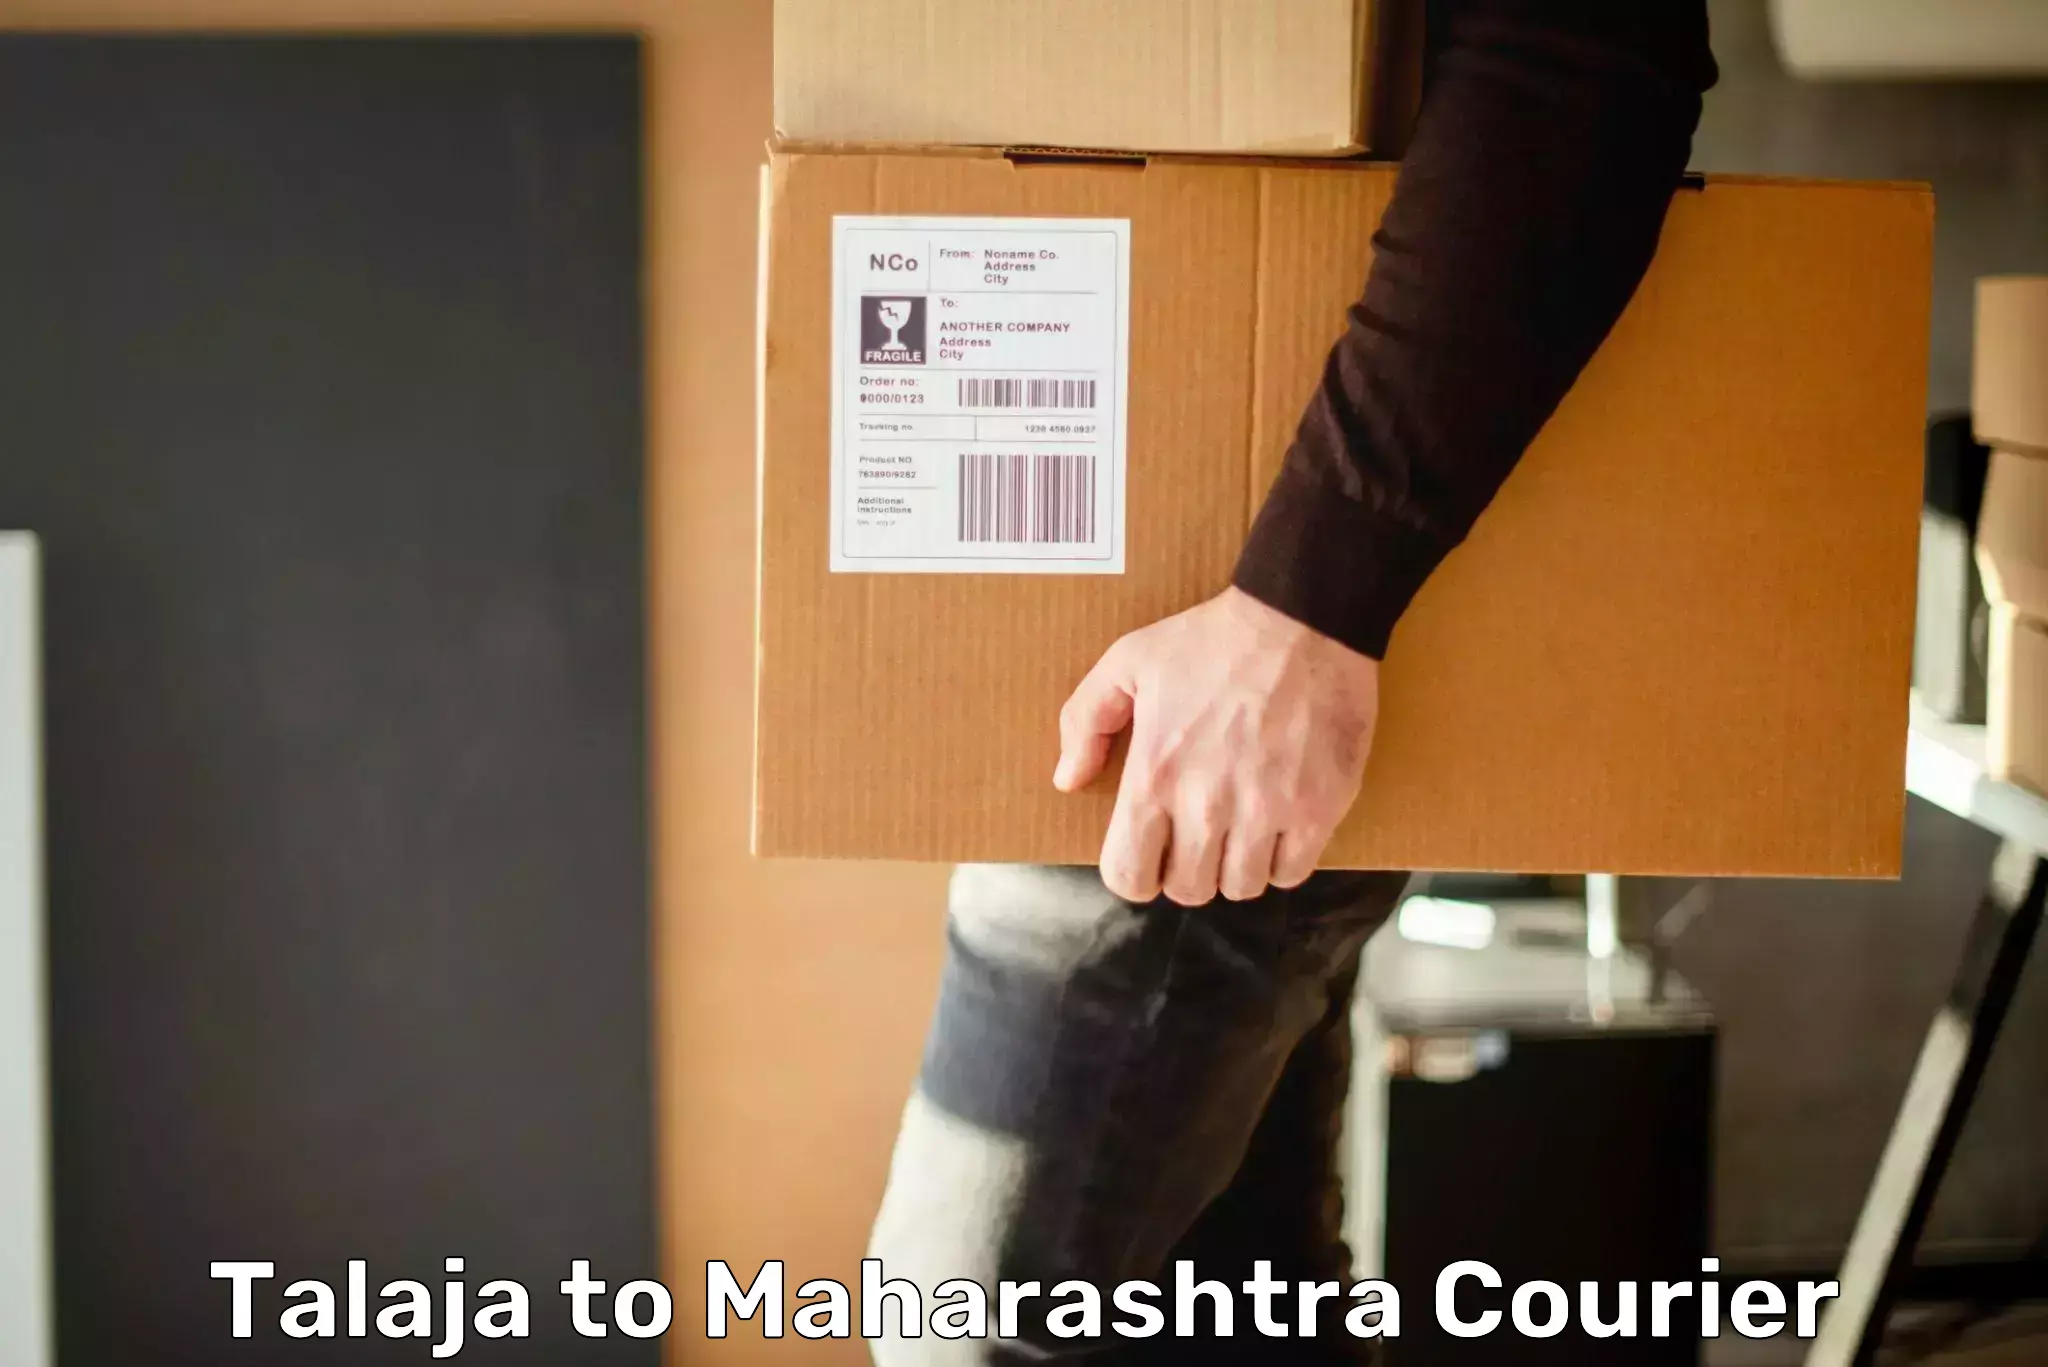 Efficient order fulfillment Talaja to Navi Mumbai